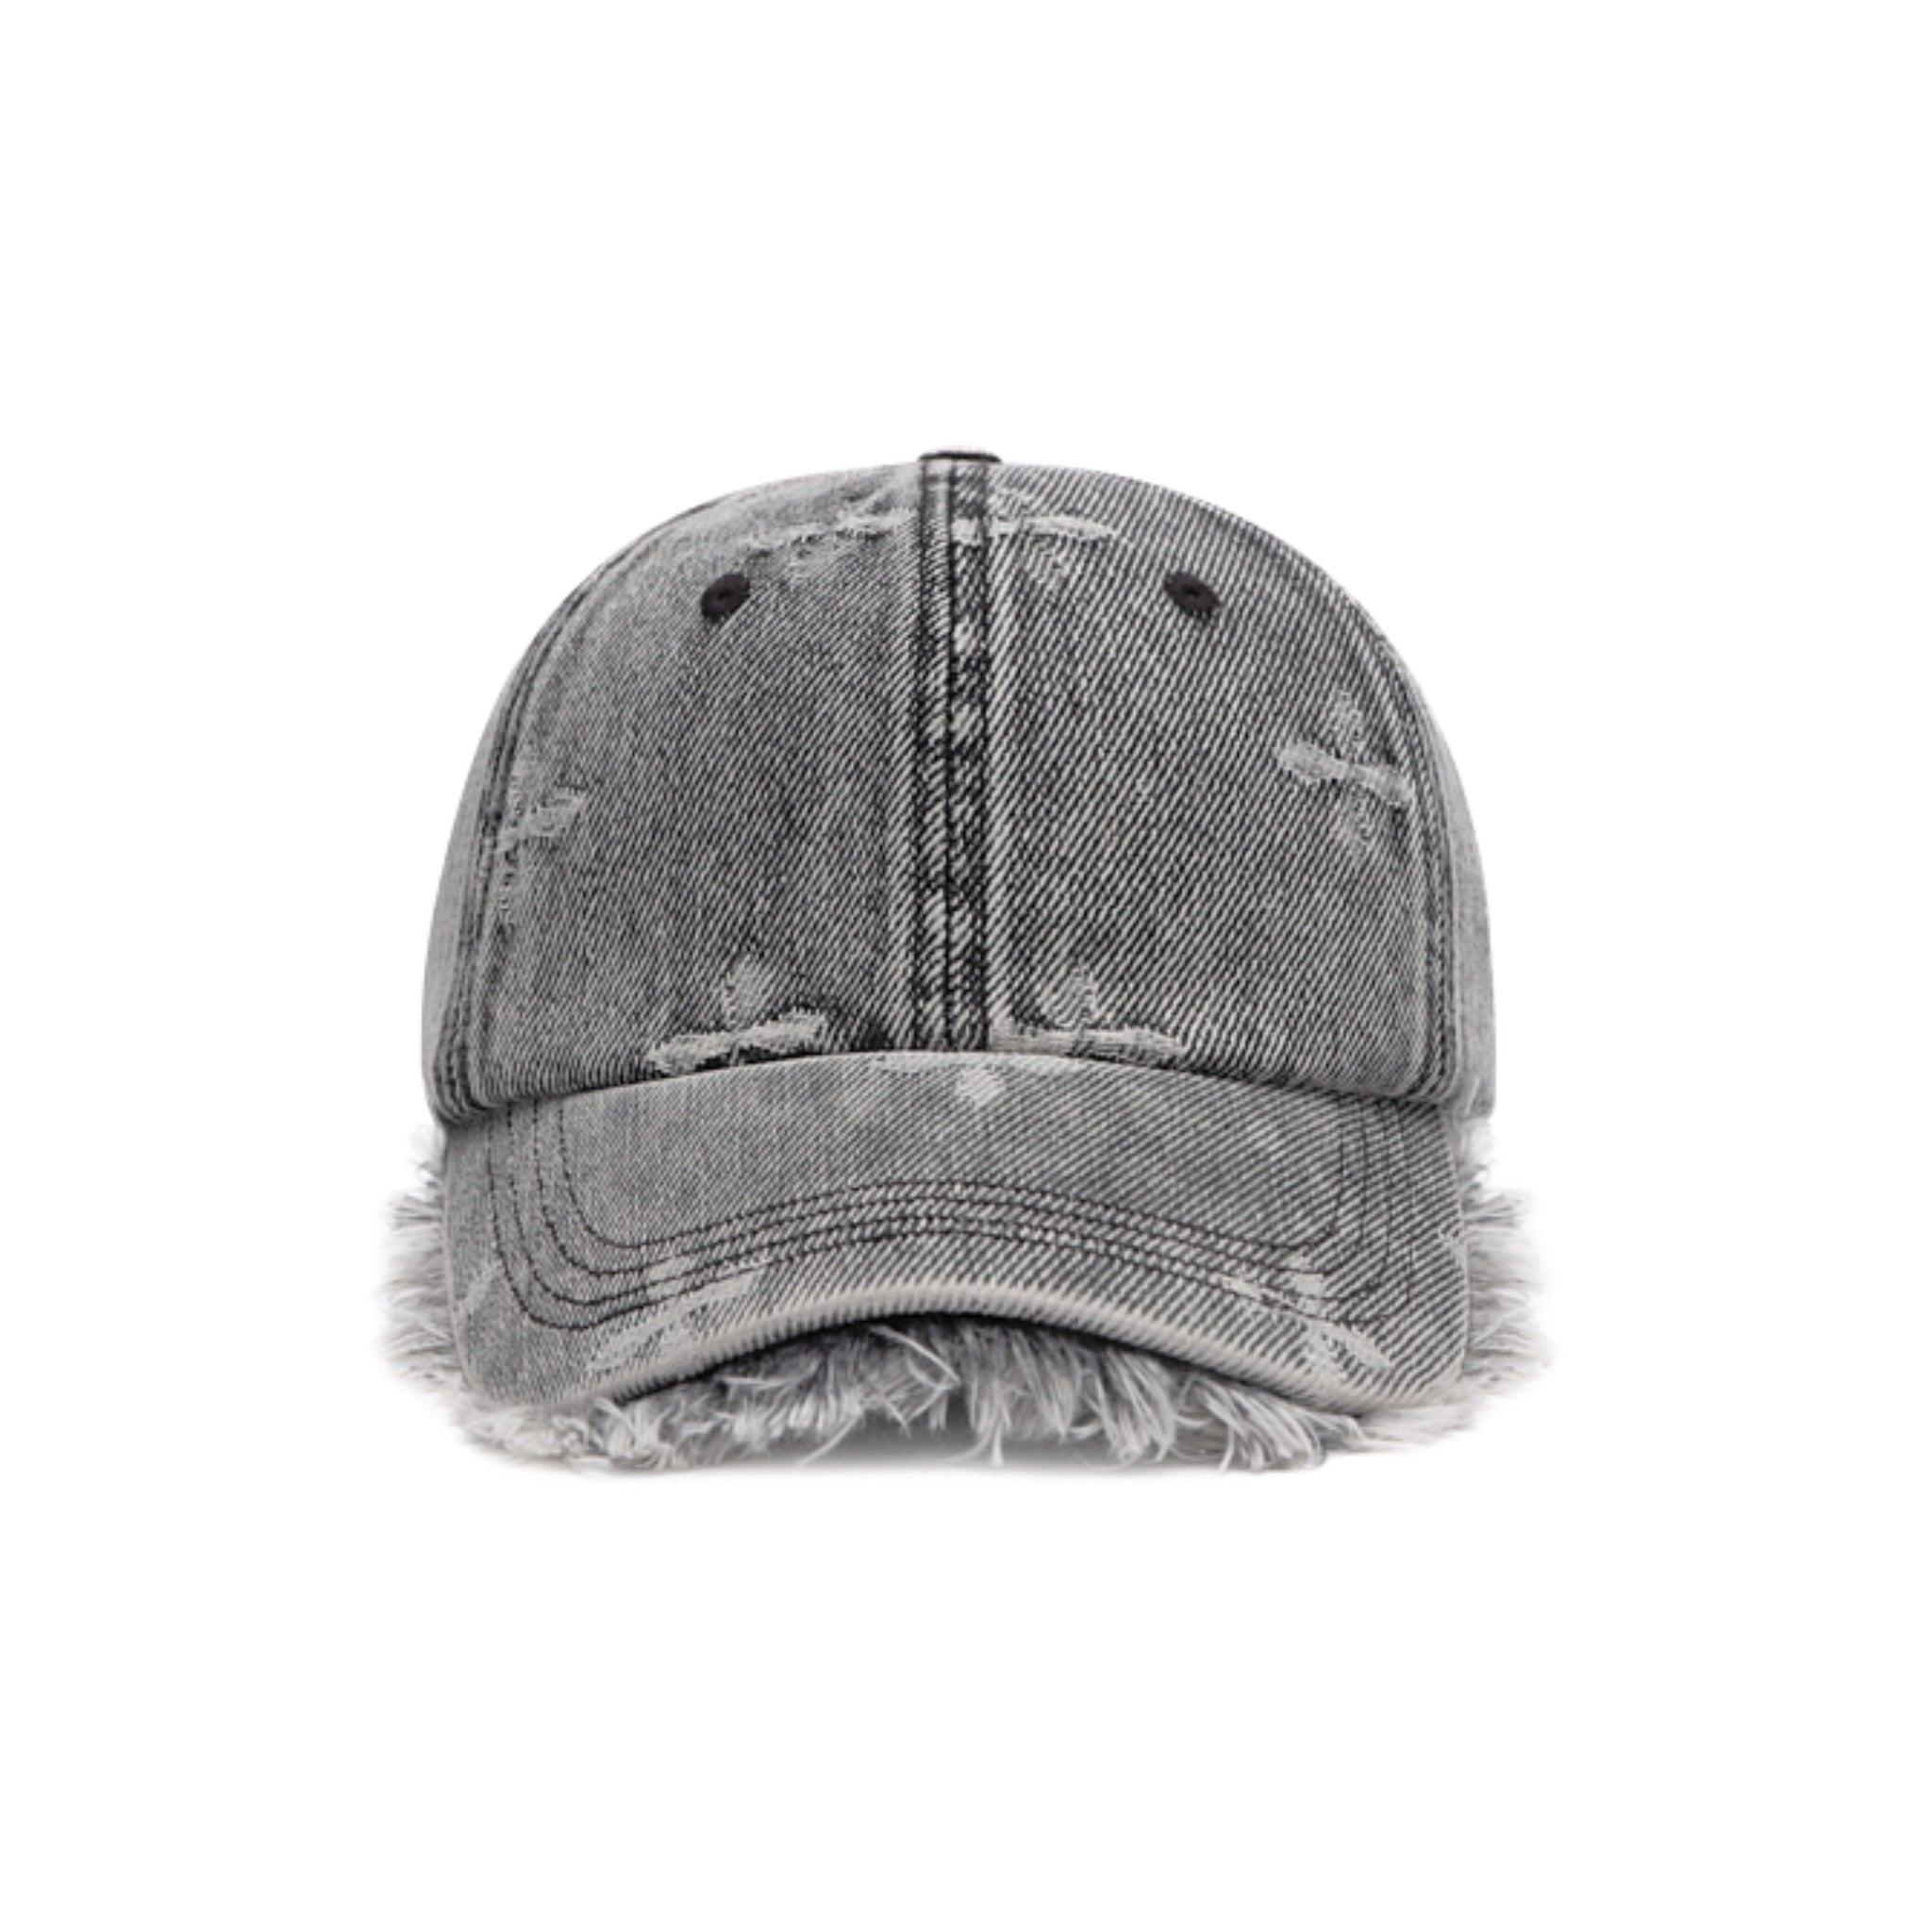 SMFK Wilderness Garden Cowboy Baseball Cap Snowflake Grey in Gray | Lyst